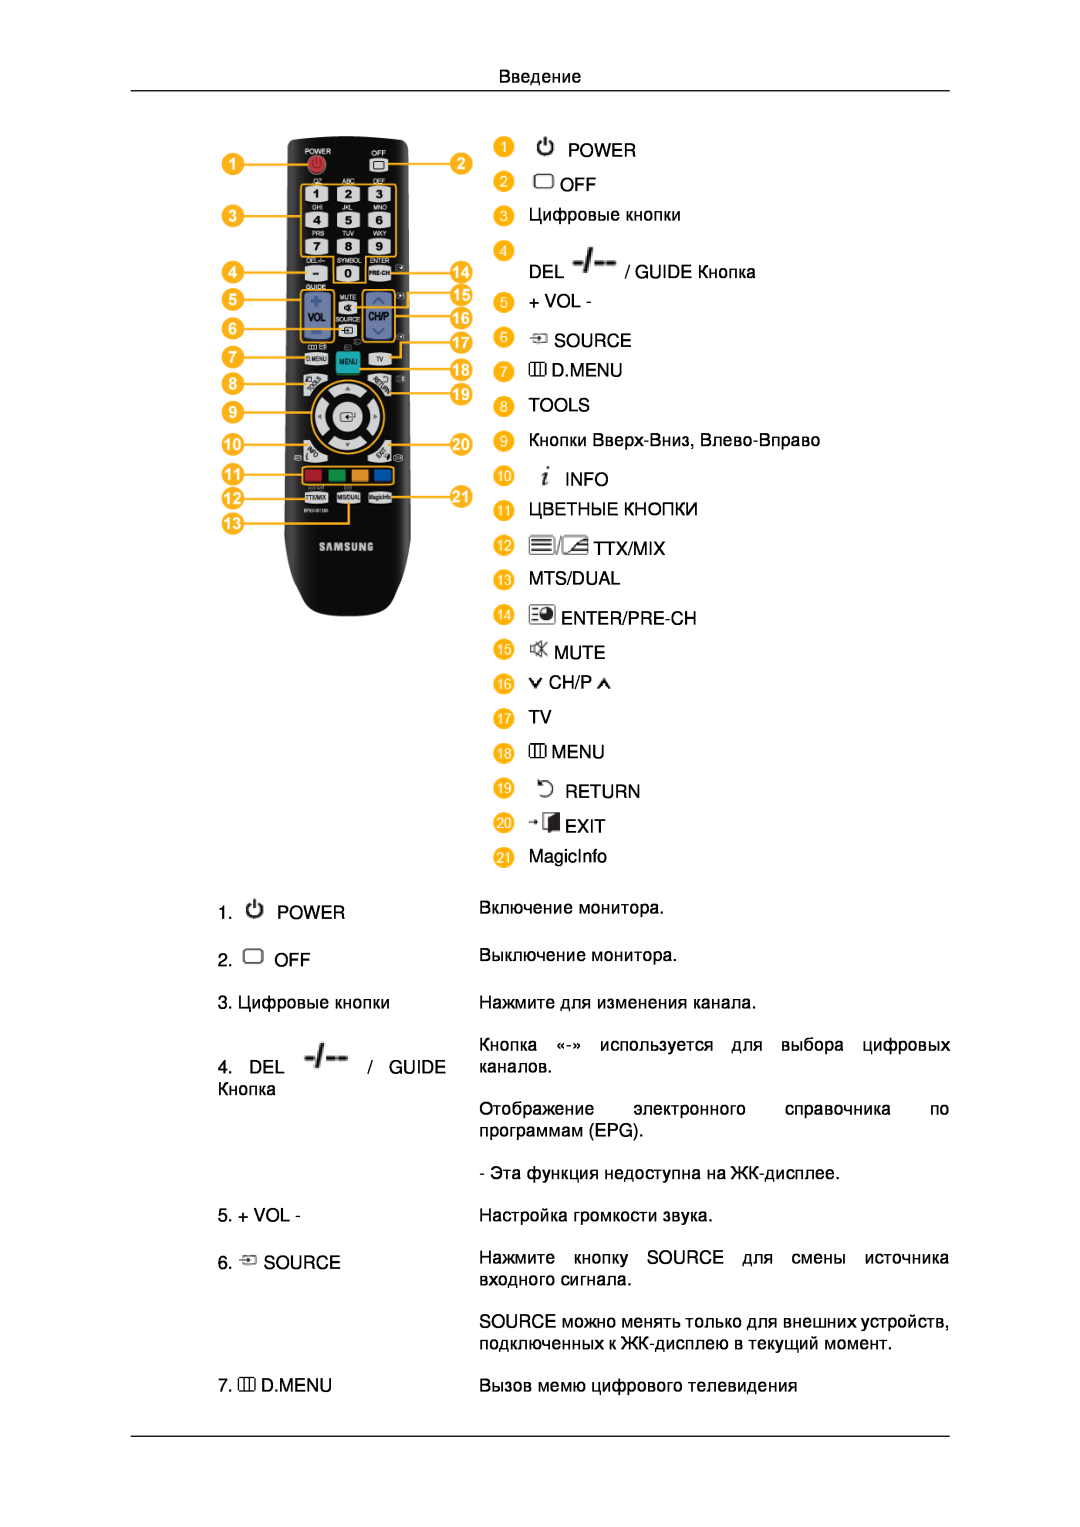 Samsung LH46MSTLBB/EN manual Введение, POWER 2. OFF 3. Цифровые кнопки 4. DEL / GUIDE Кнопка 5. + VOL, Source, 7. D.MENU 